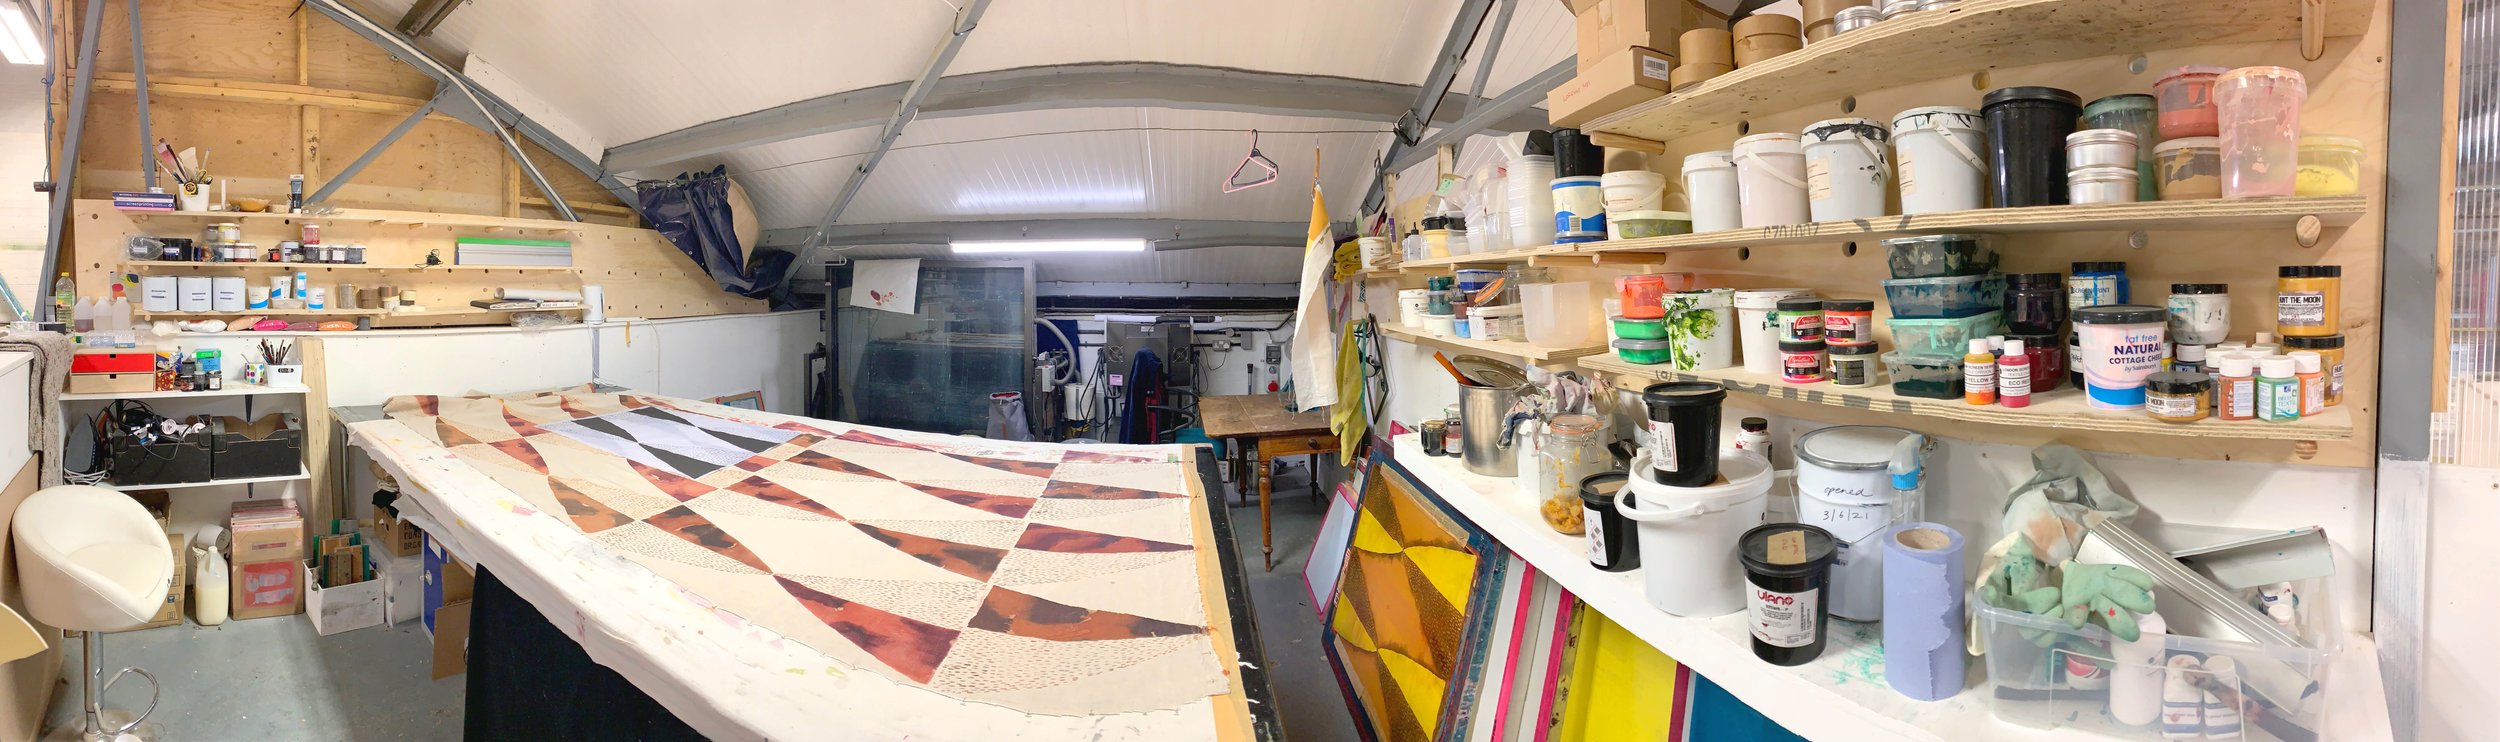 Textile Print Studio Space Image #0